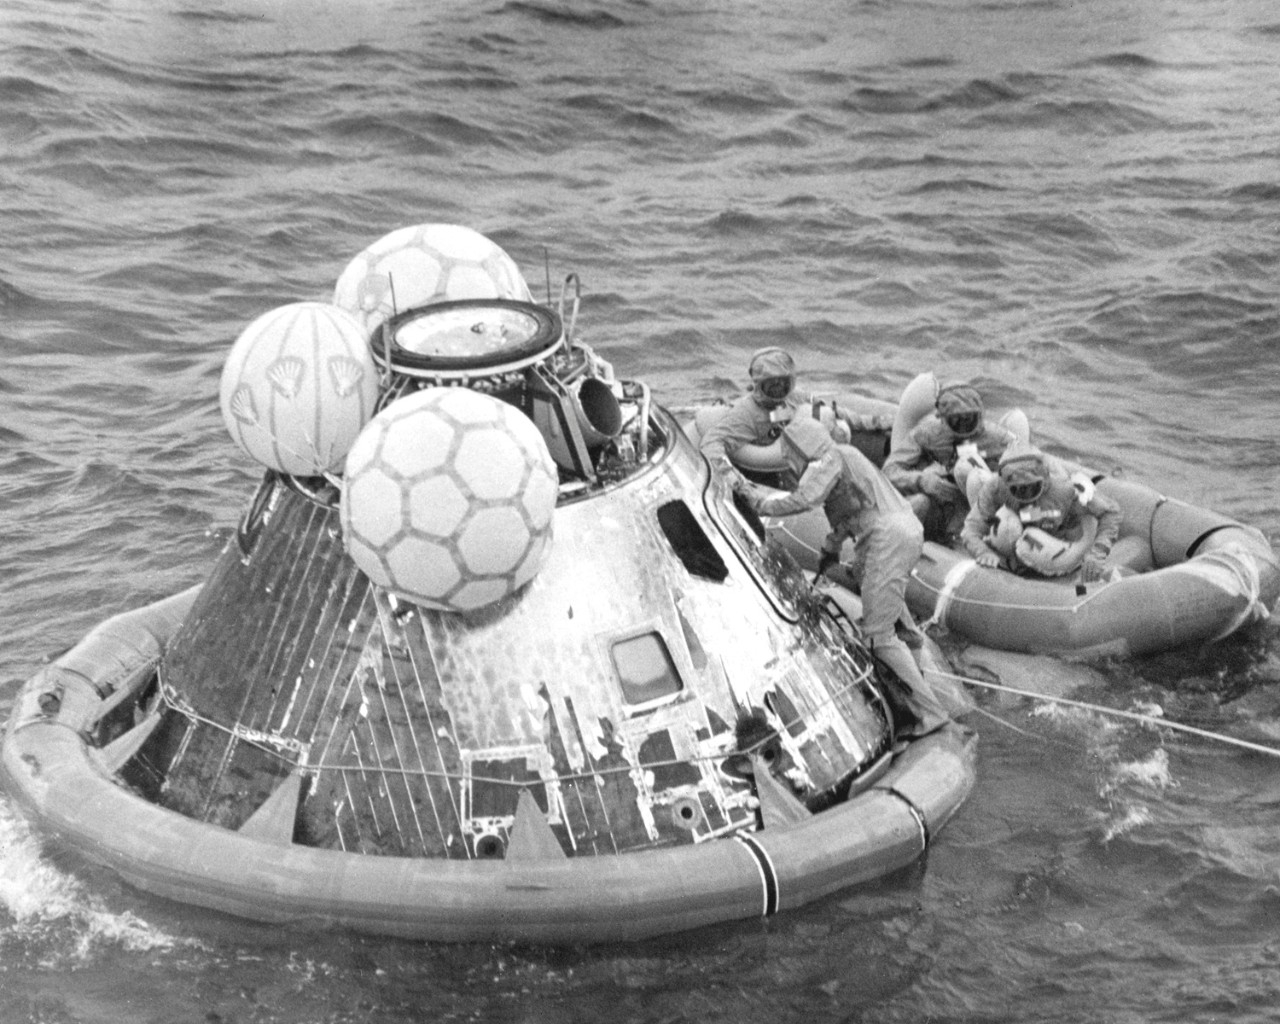 Recovery of Apollo 11